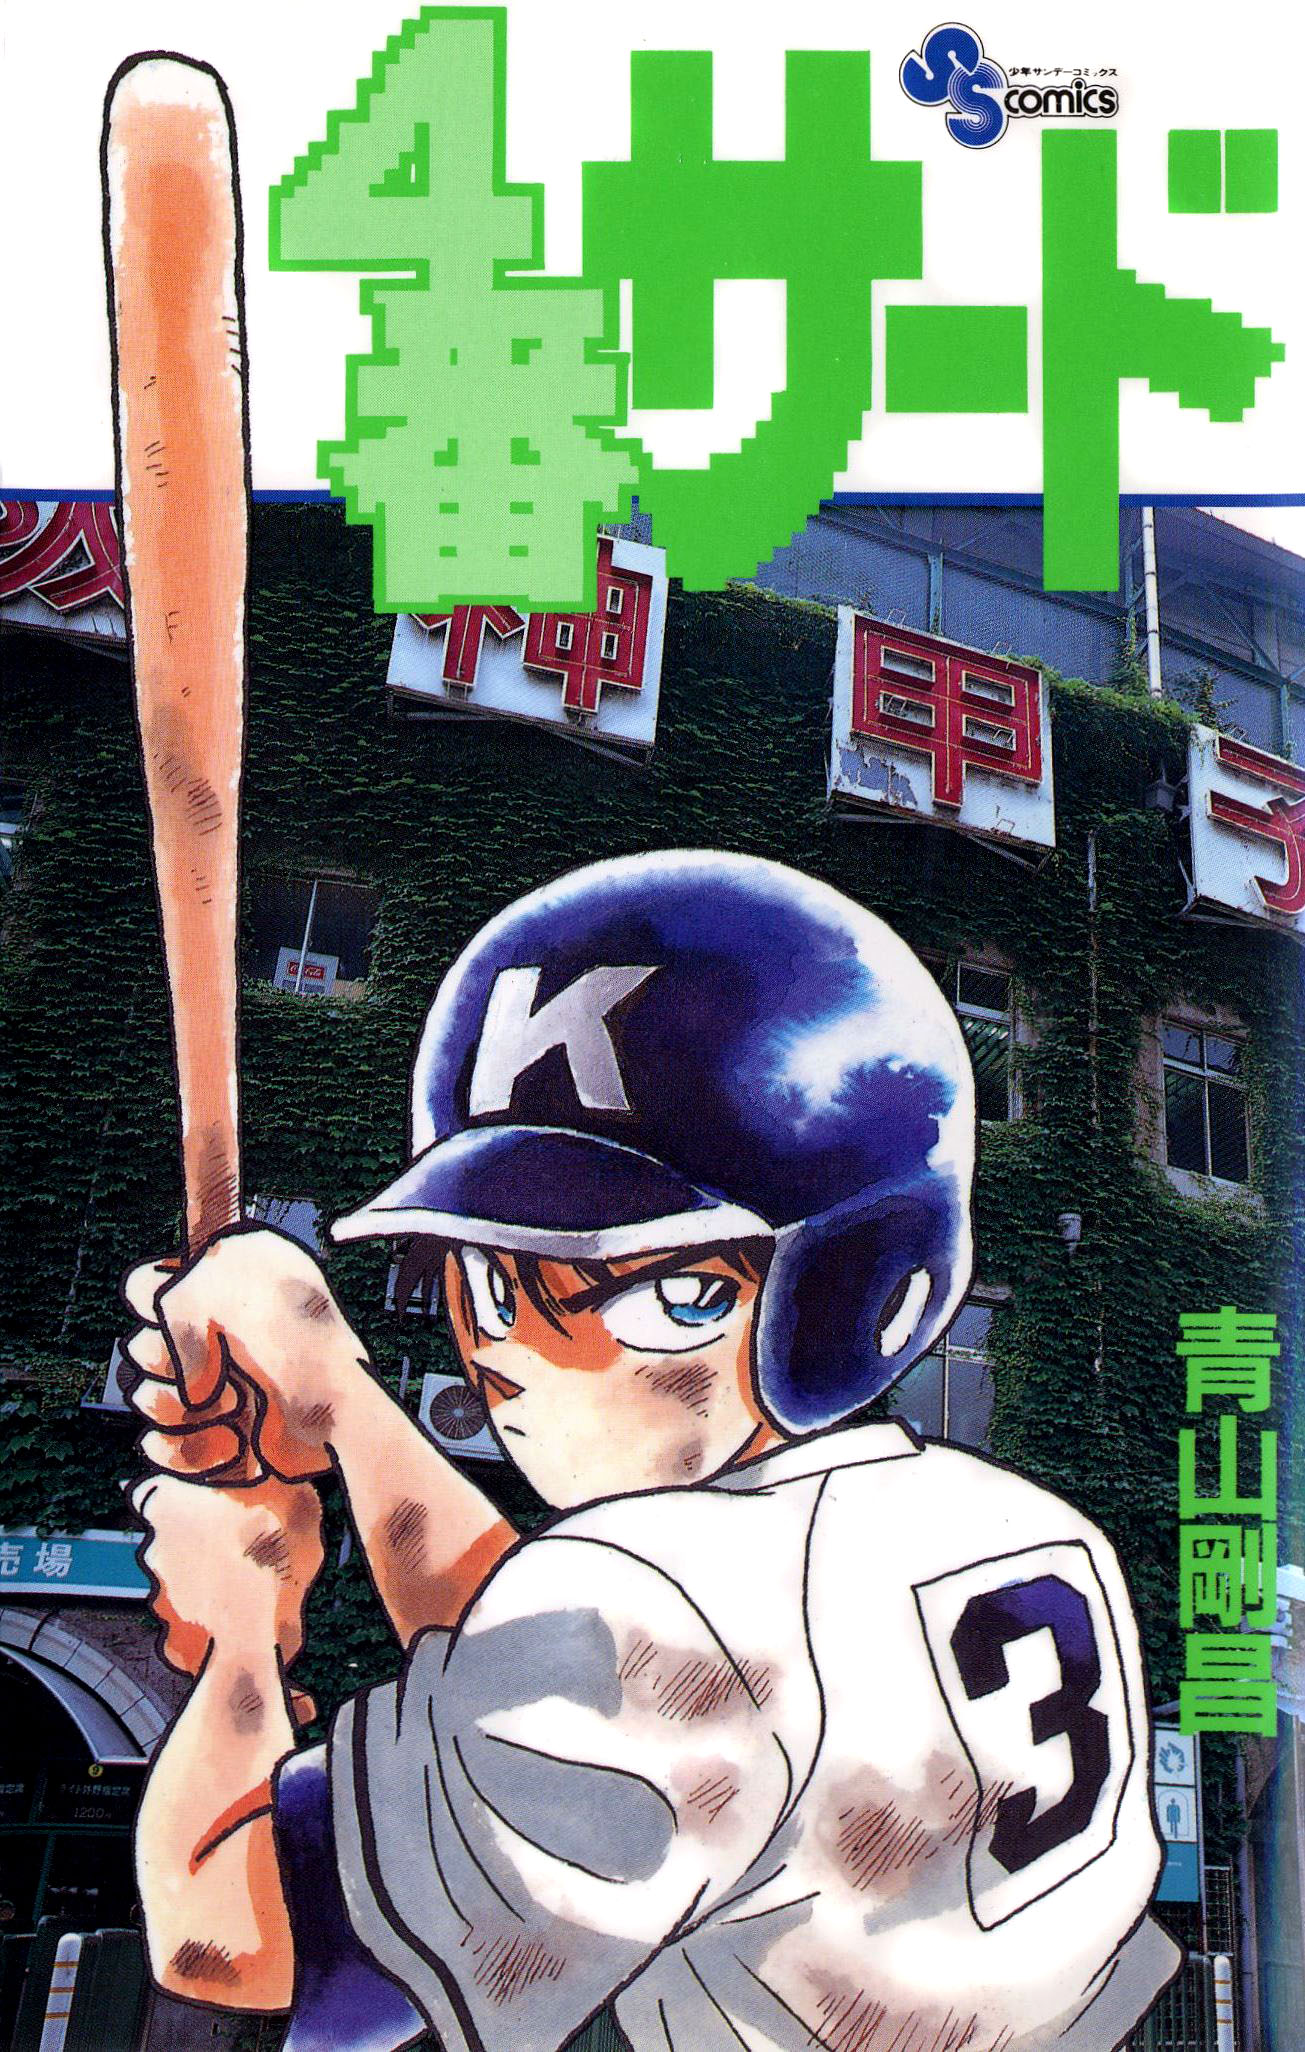 manga-4.jpg (1305×2052)